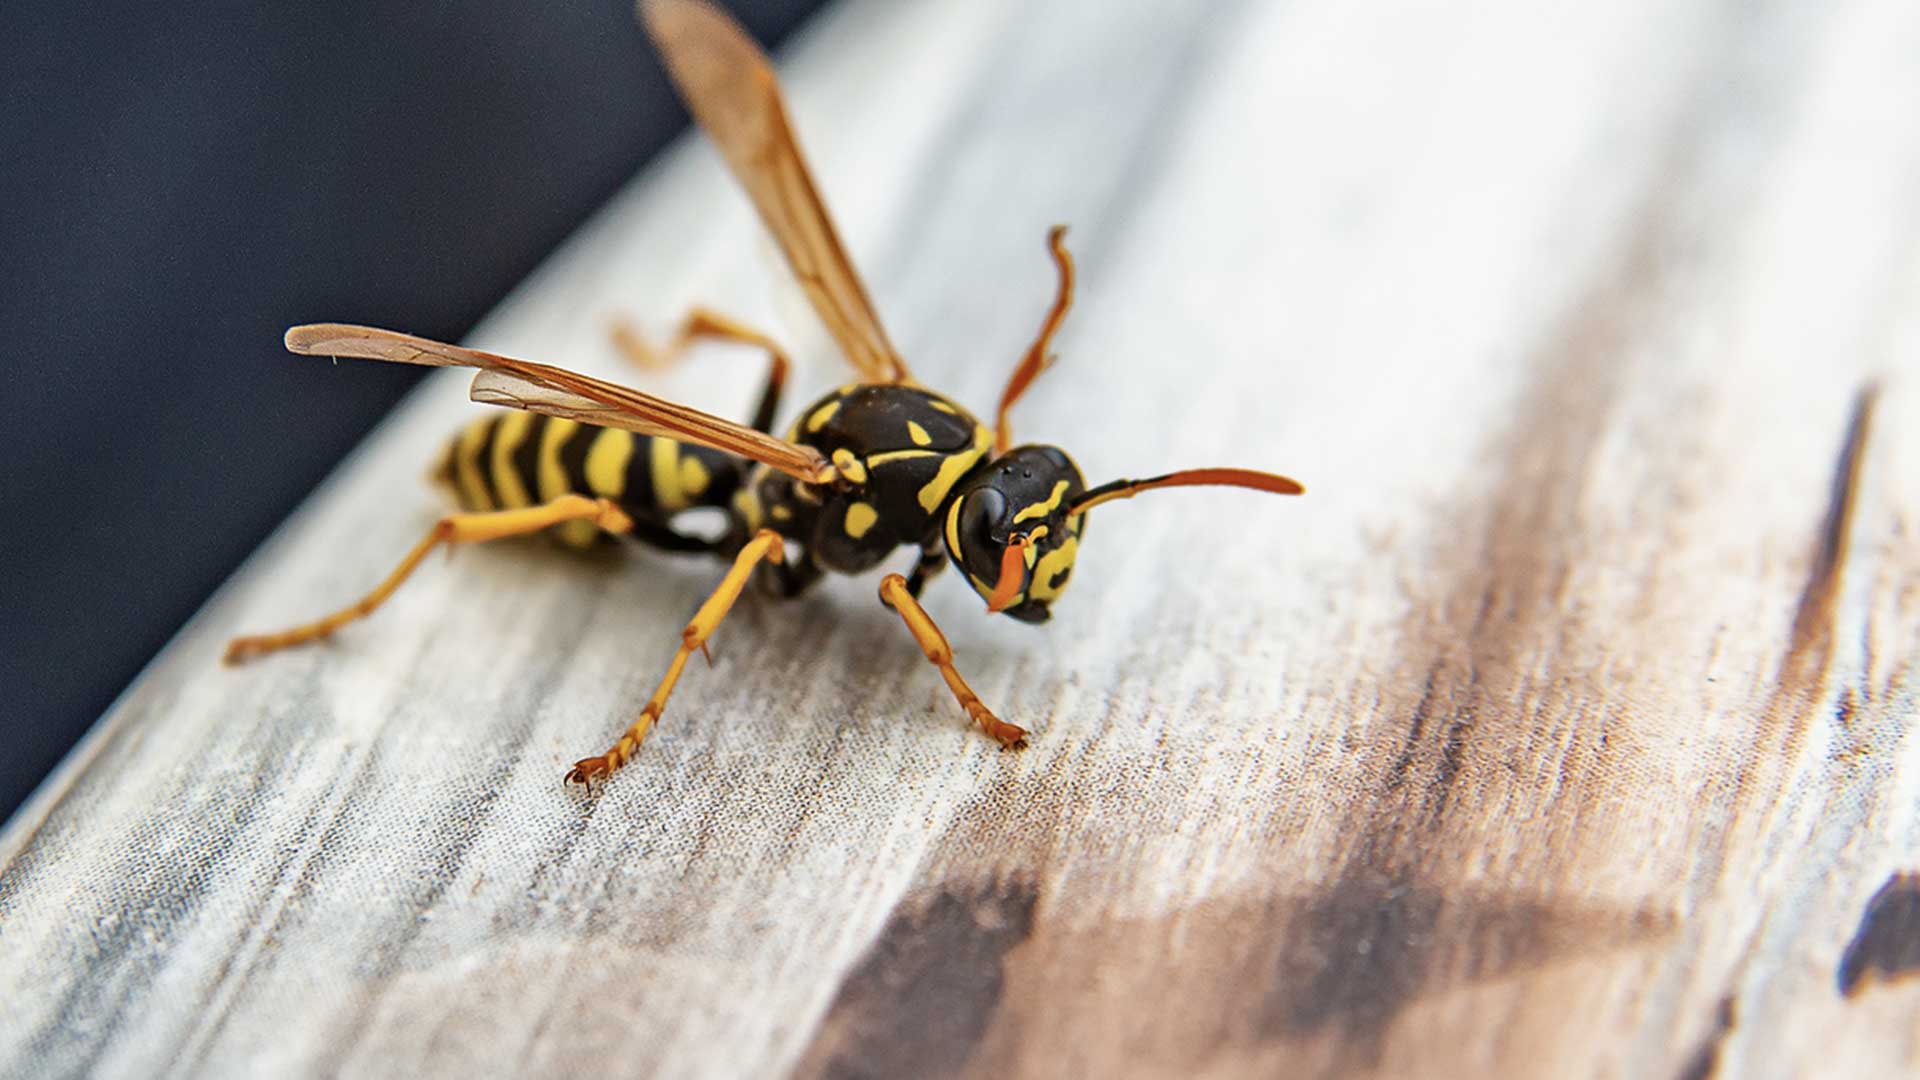 giant yellow wasps crawling on wood